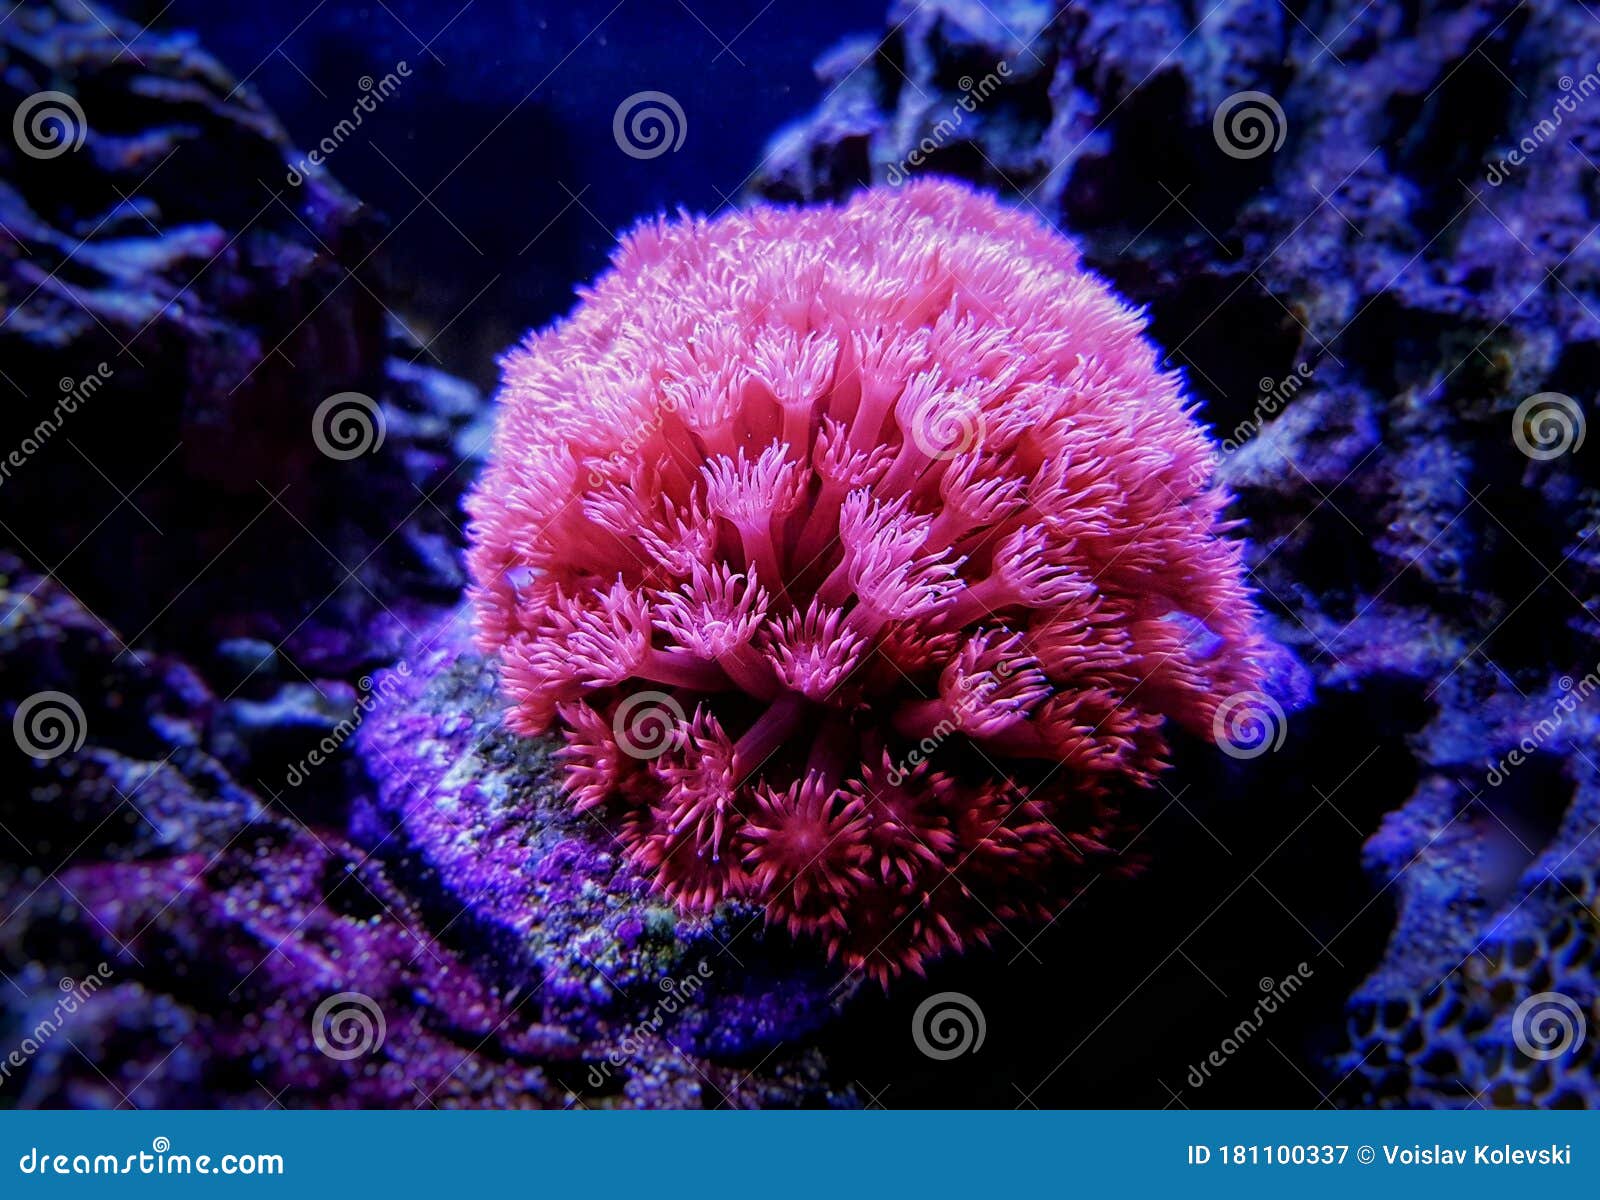 pink flower pot goniopora sp. lps coral